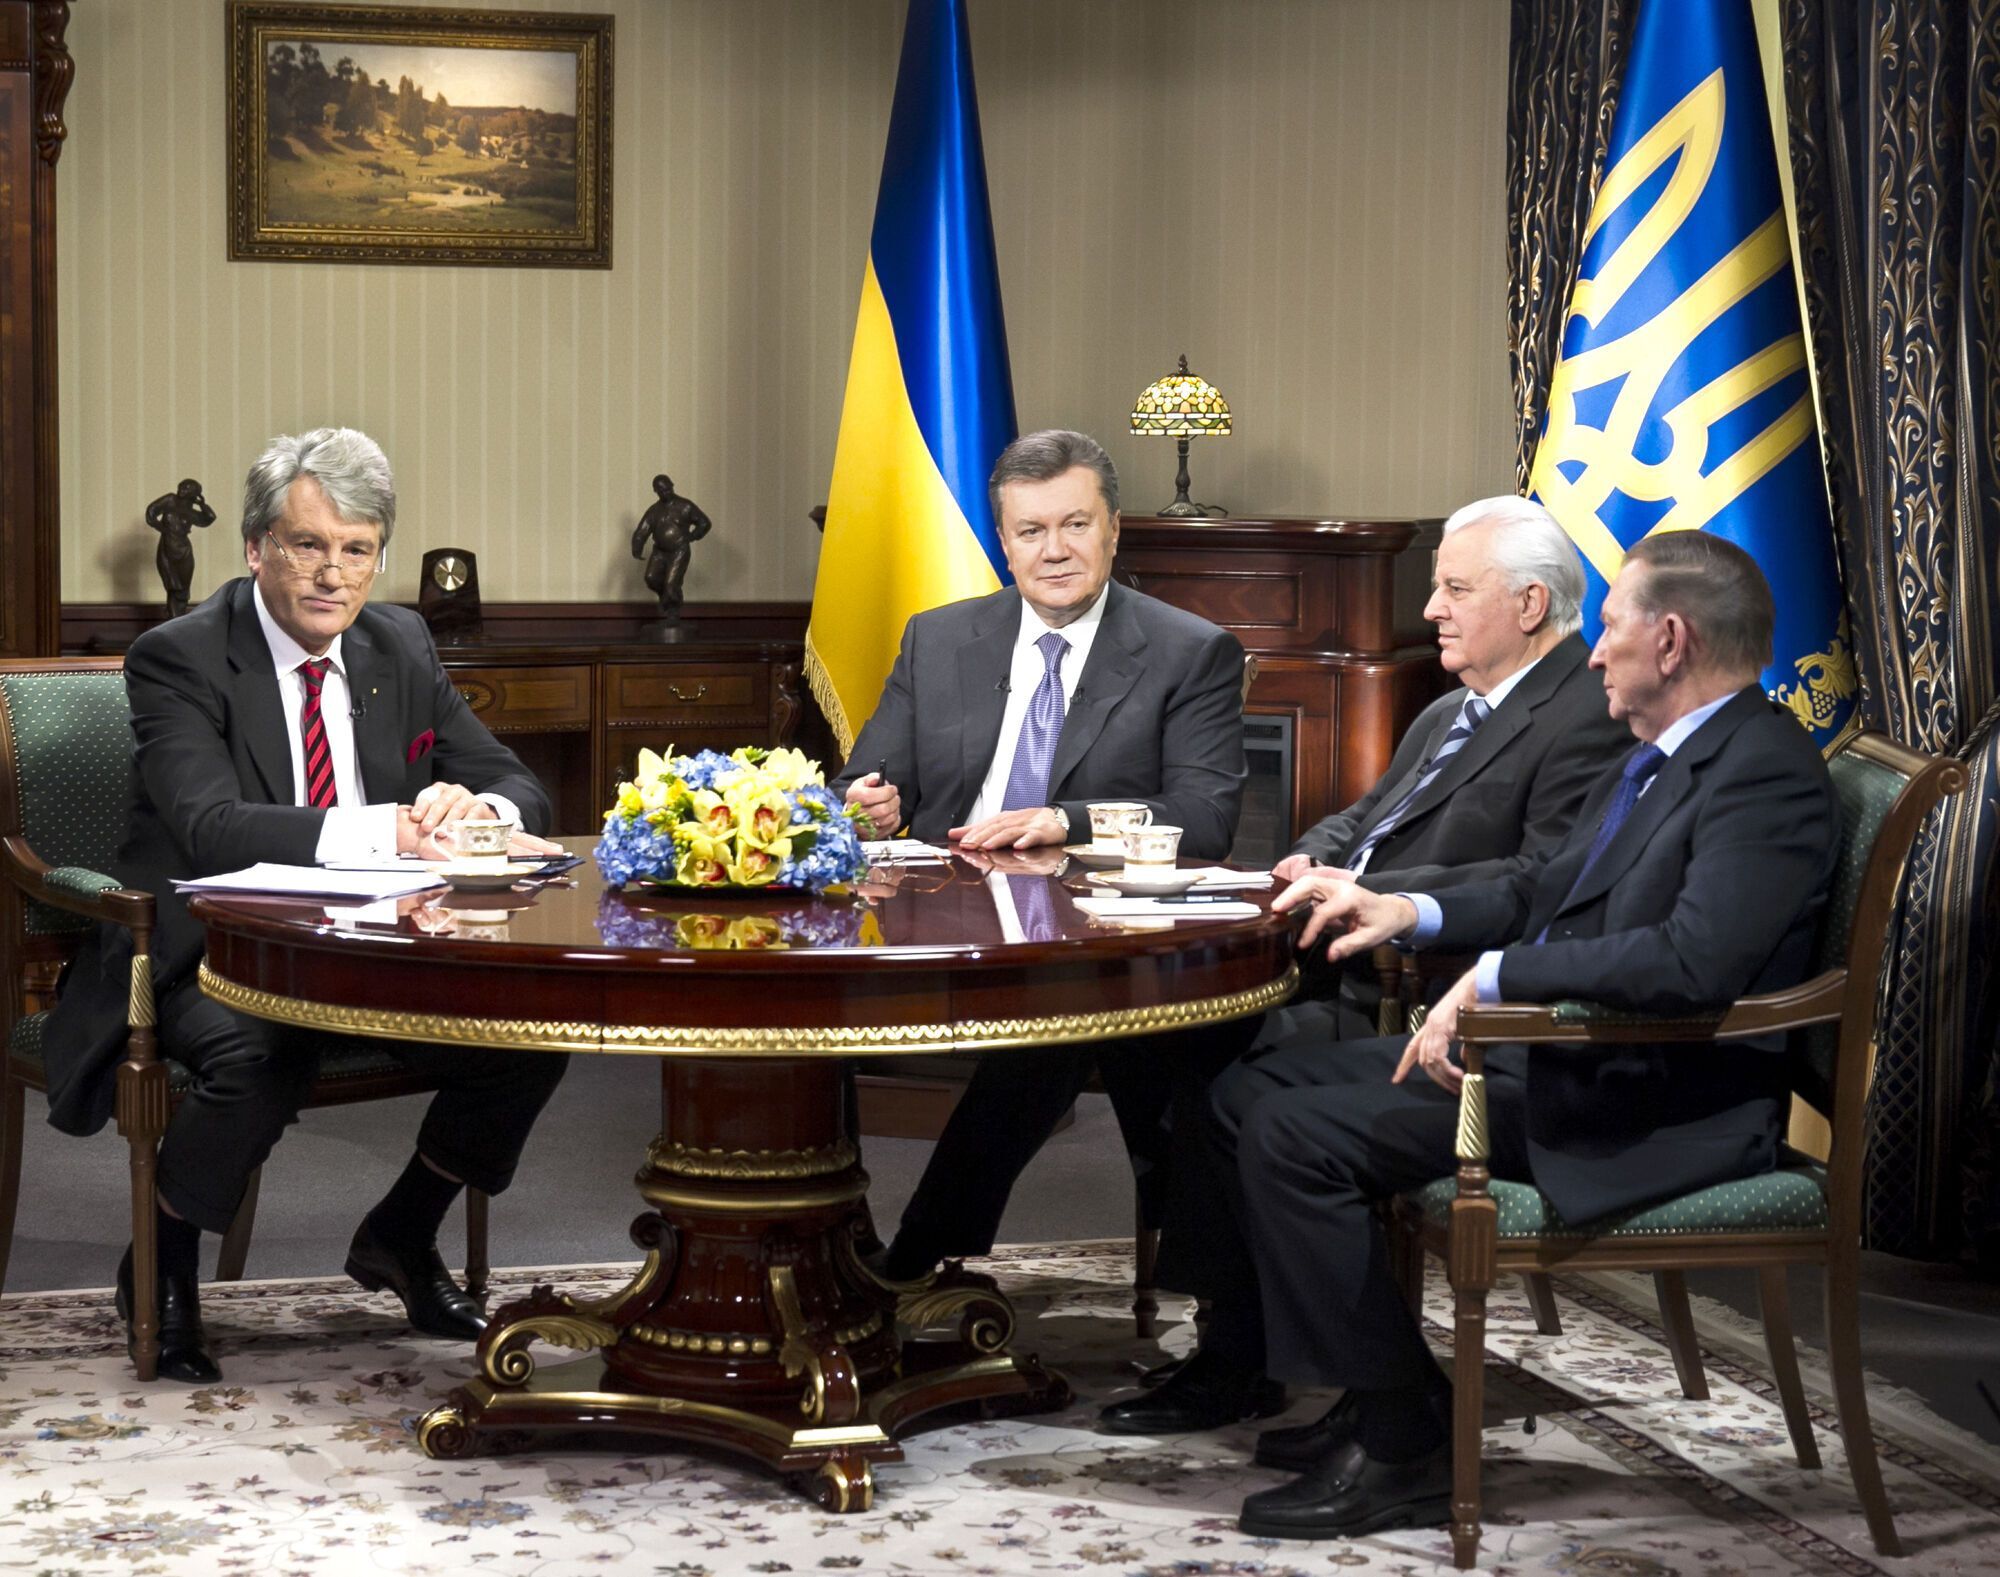 Четыре президента Украины Виктор Ющенко, Виктор Янукович, Леонид Кравчук и Леонид Кучма